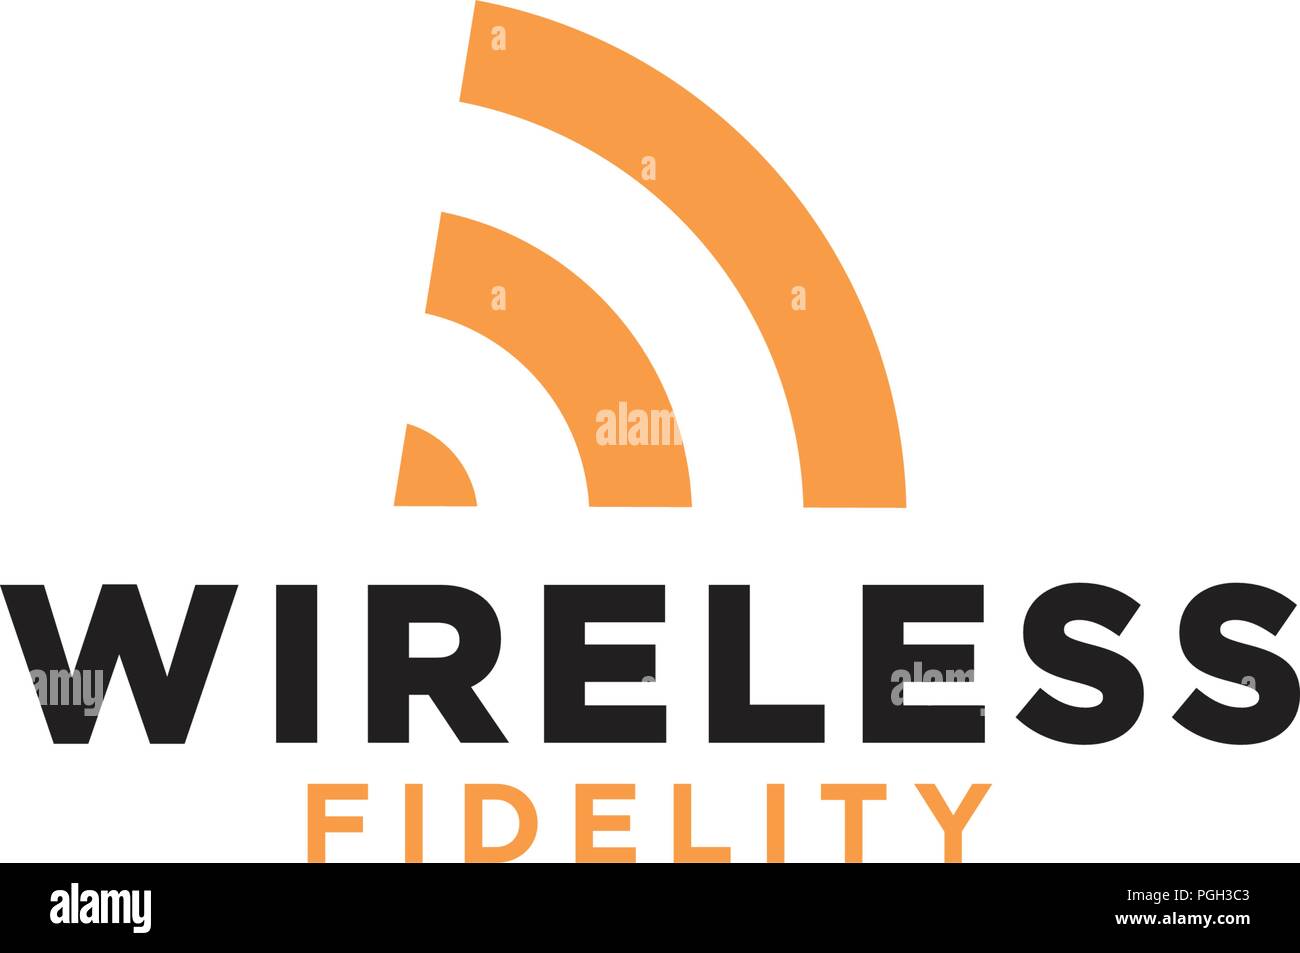 Wireless fidelity wifi logo design template vector Stock Vector